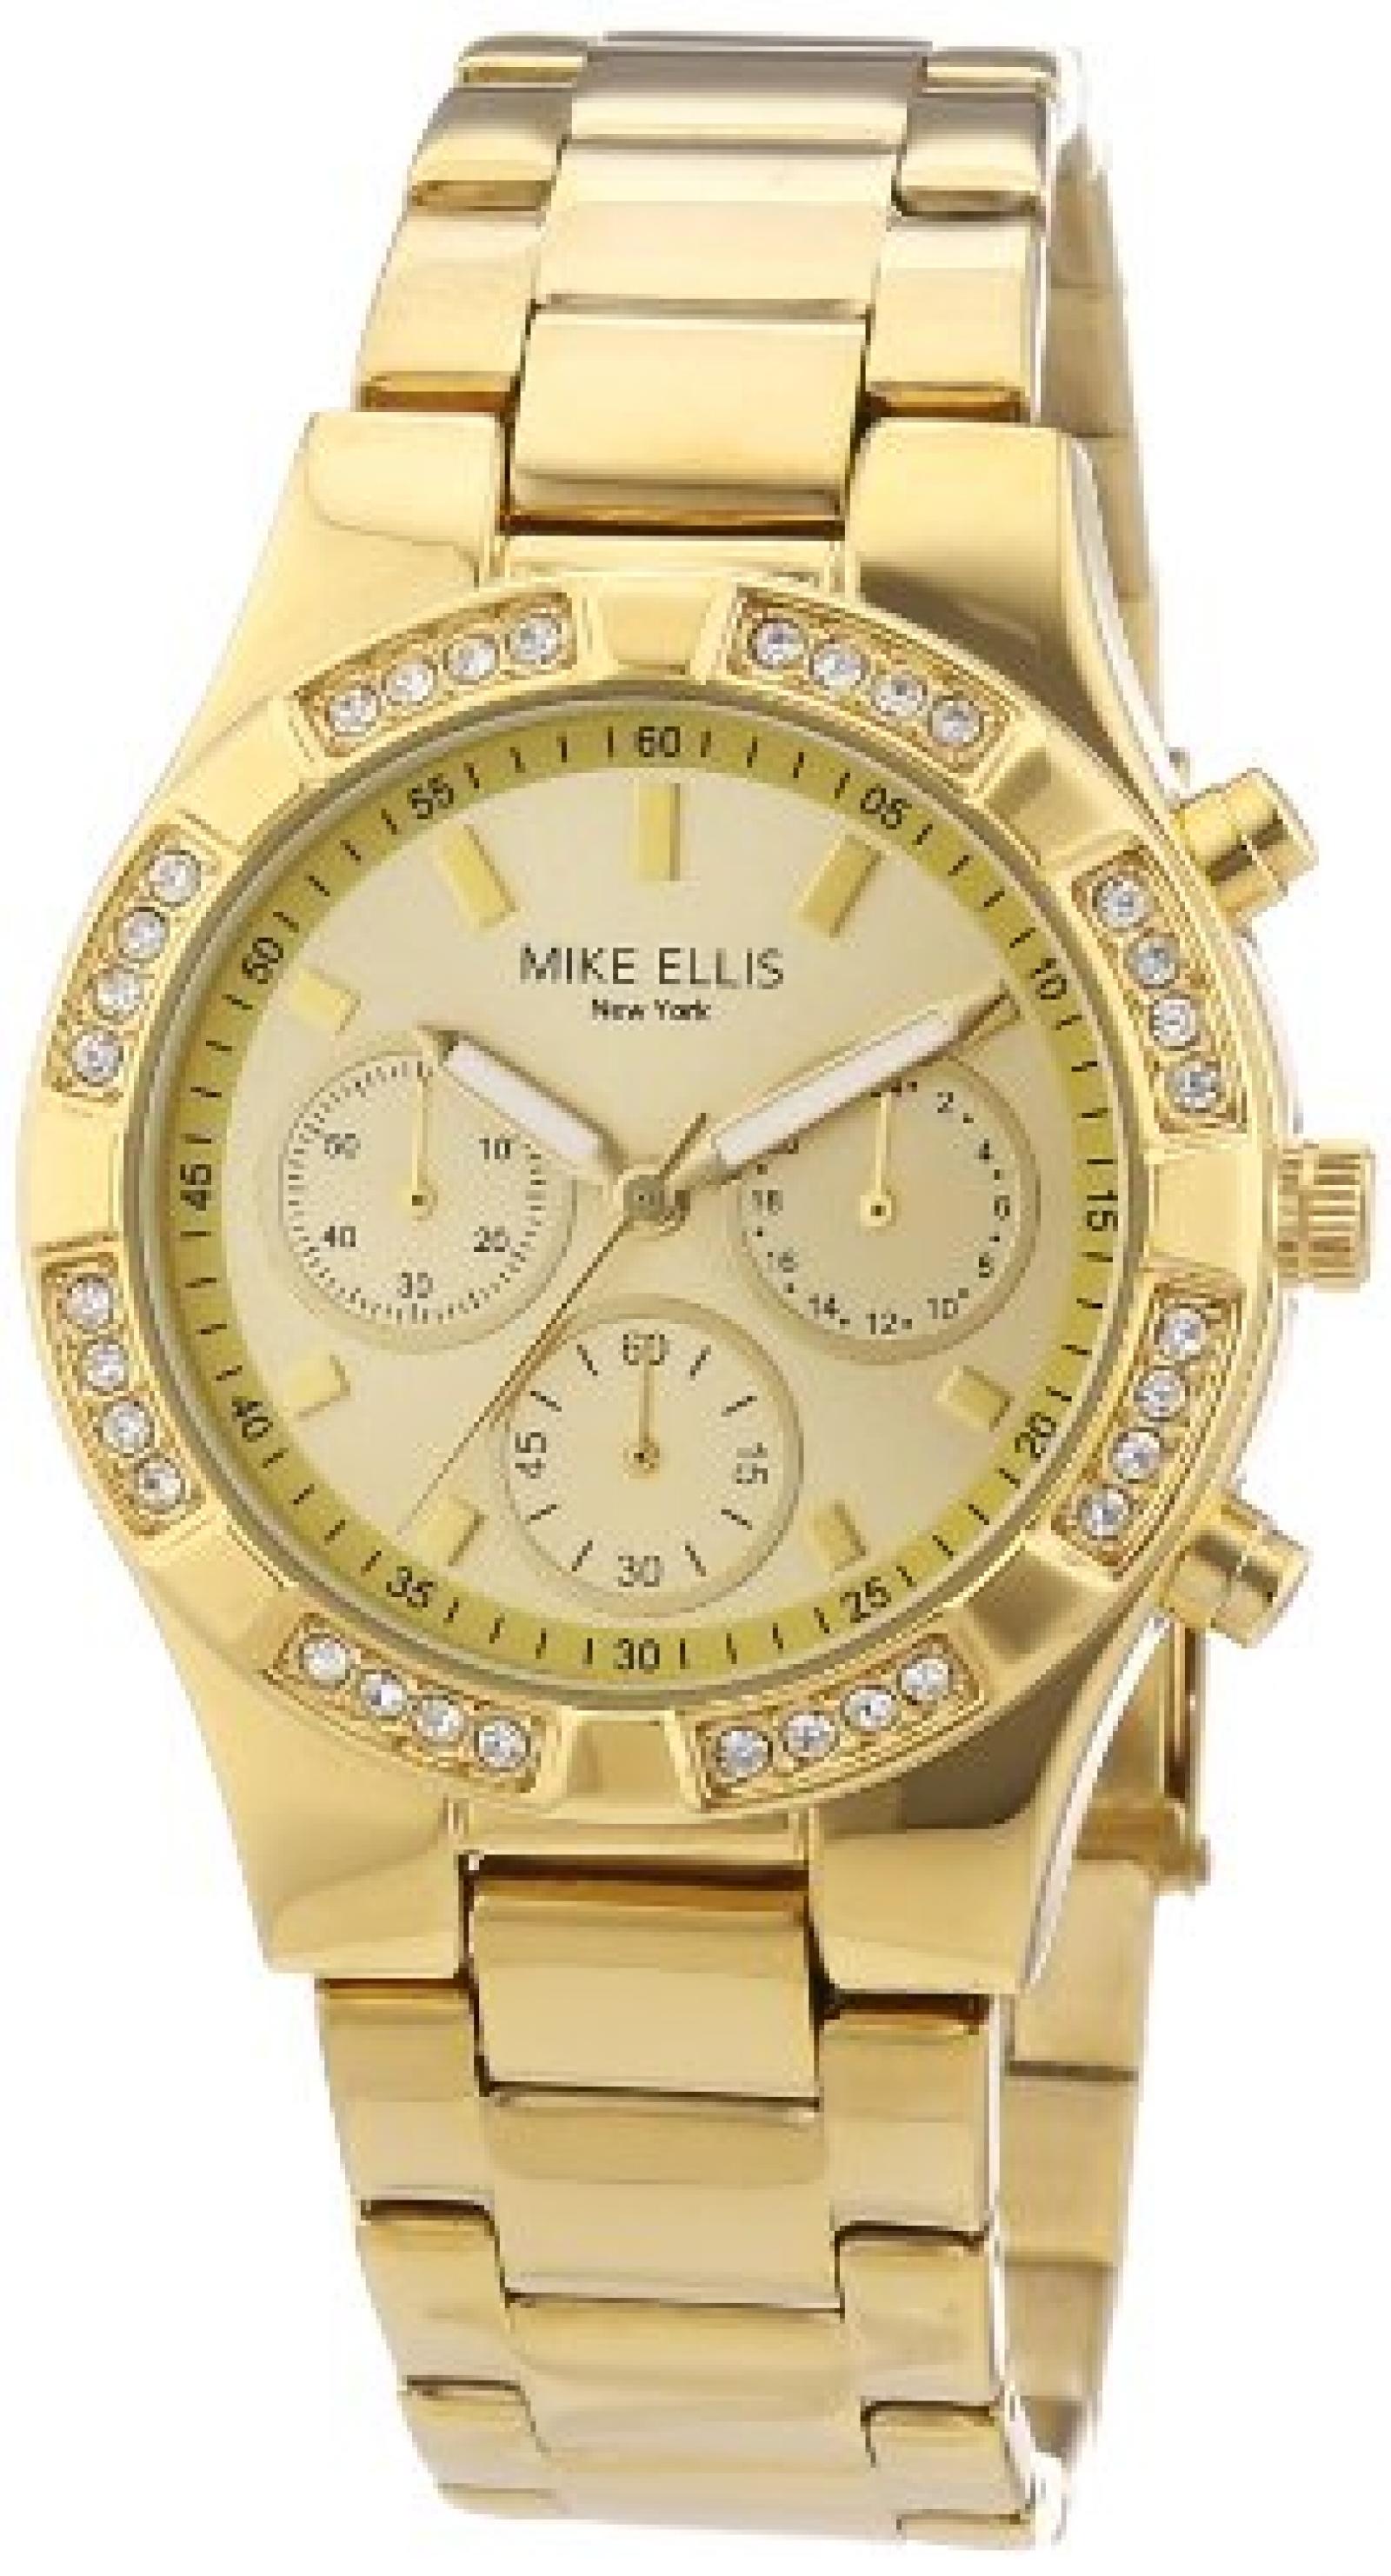 Mike Ellis New York Damen-Armbanduhr Analog Quarz Edelstahl beschichtet L2698AGM 